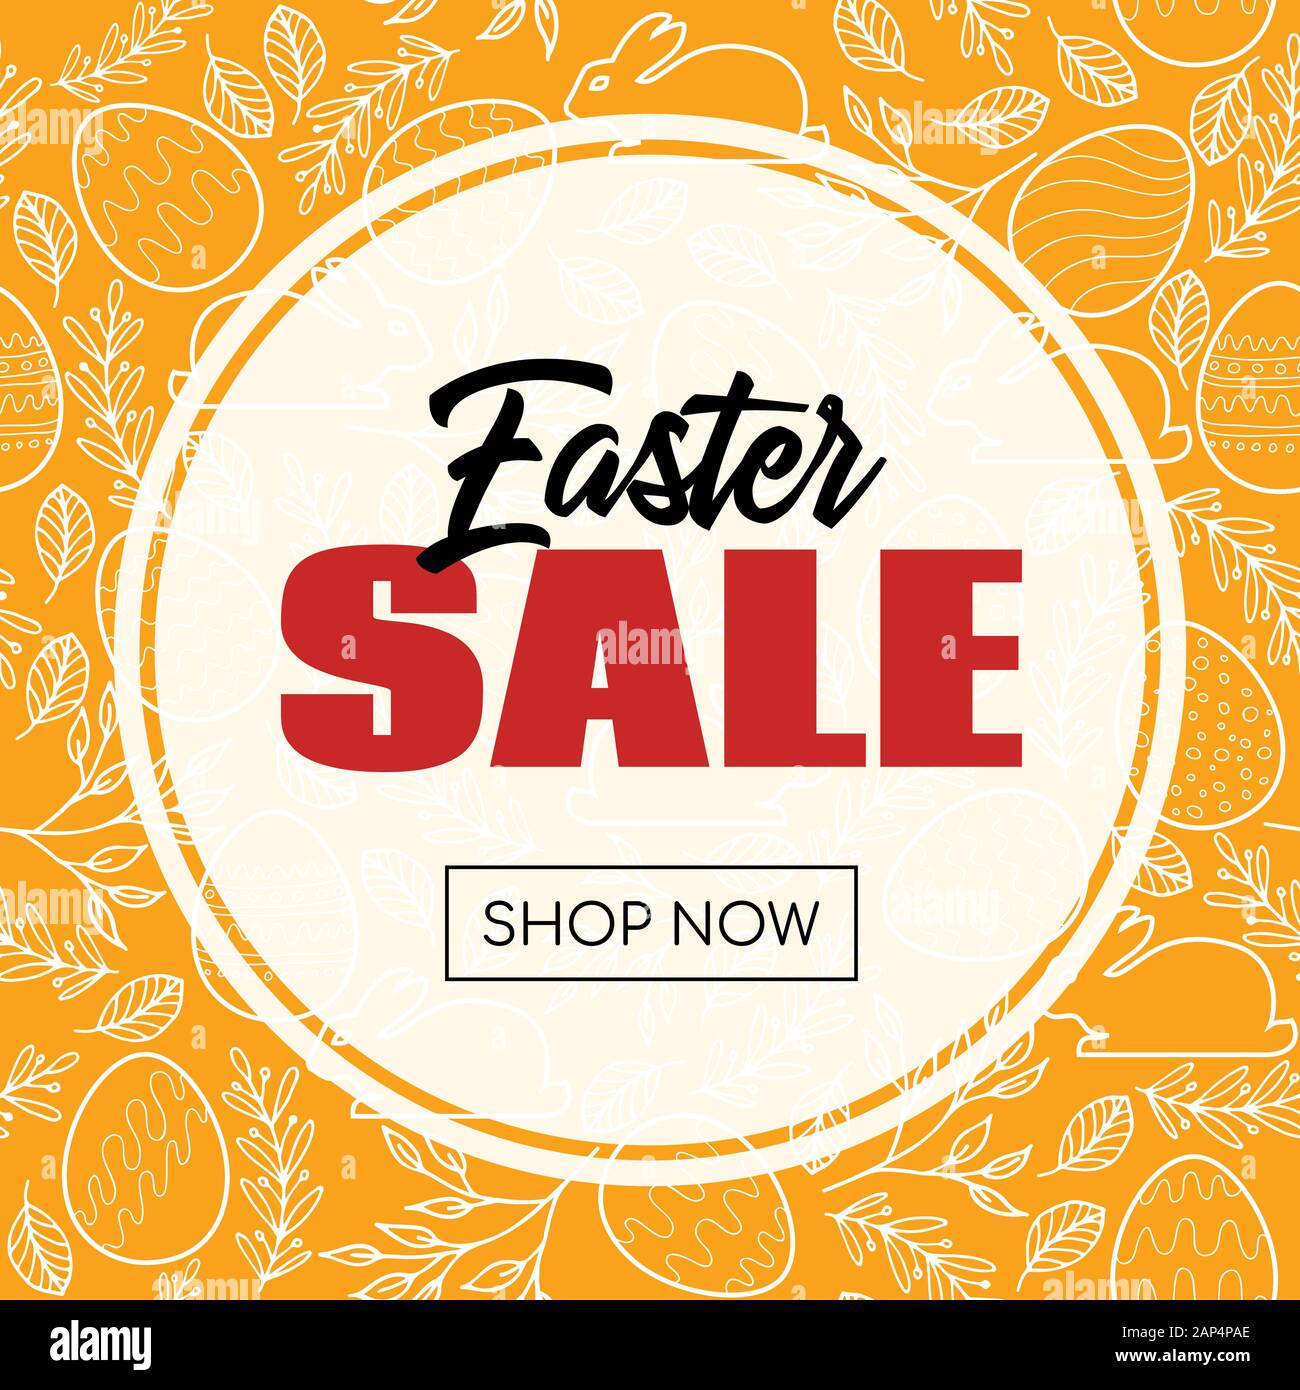 Easter sale vector banner for online store Stock Vector